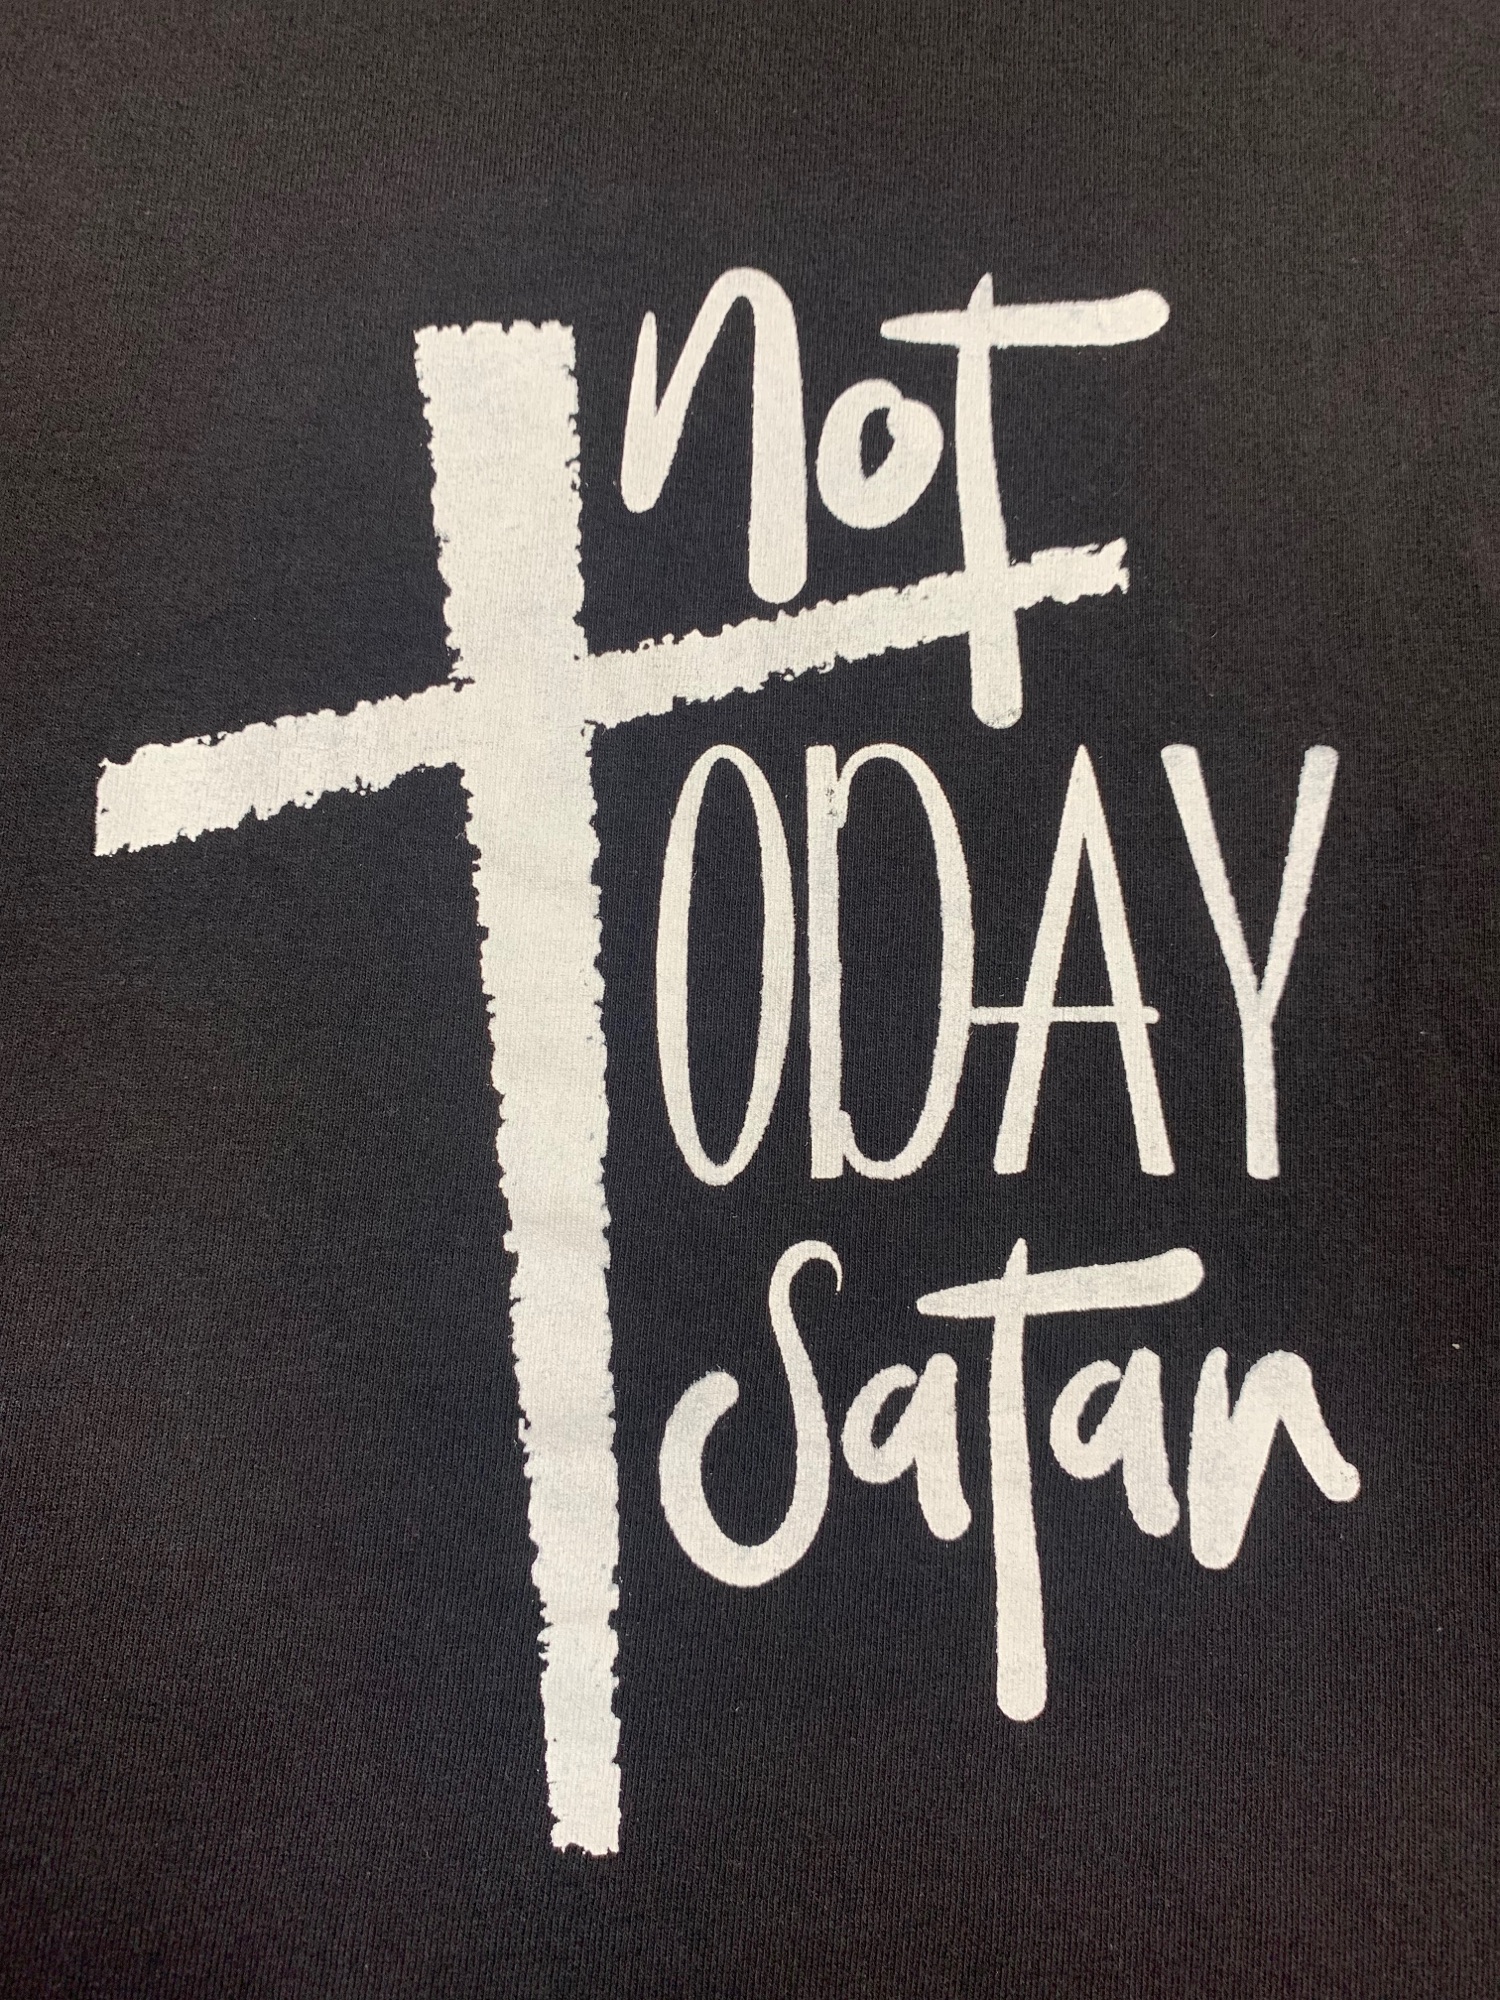 Not Today Satan Graphic Tee Men's Black T-Shirt Size Large